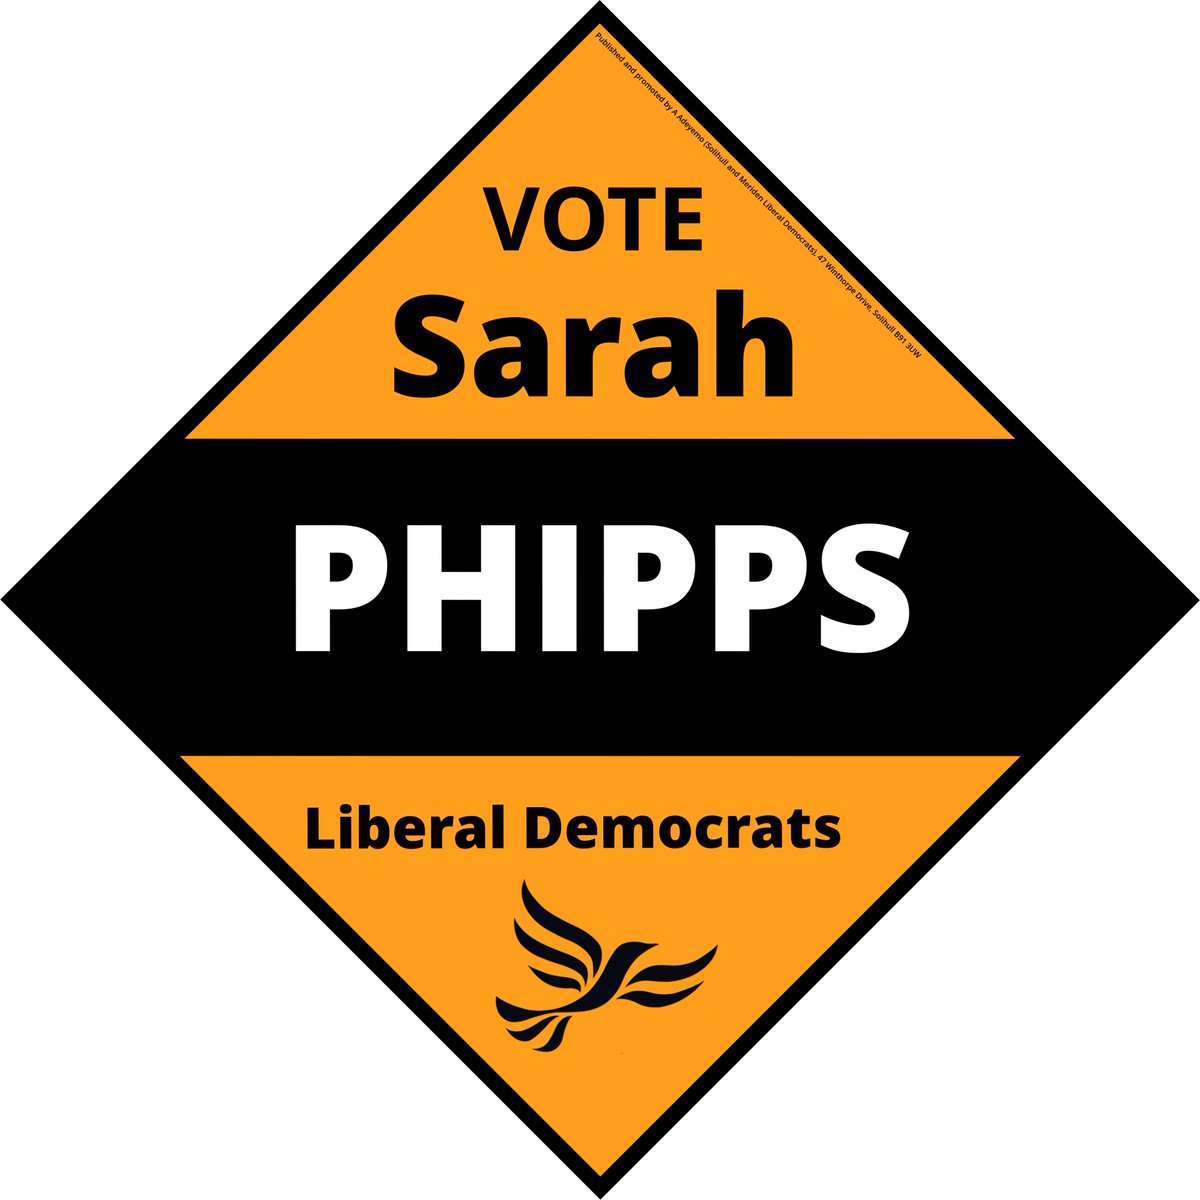 Sarah Phipps: Liberal Democrat Candidate for Olton ward, Solihull 🗳️🔶
#Olton #Solihull #LibDems #SarahForOlton